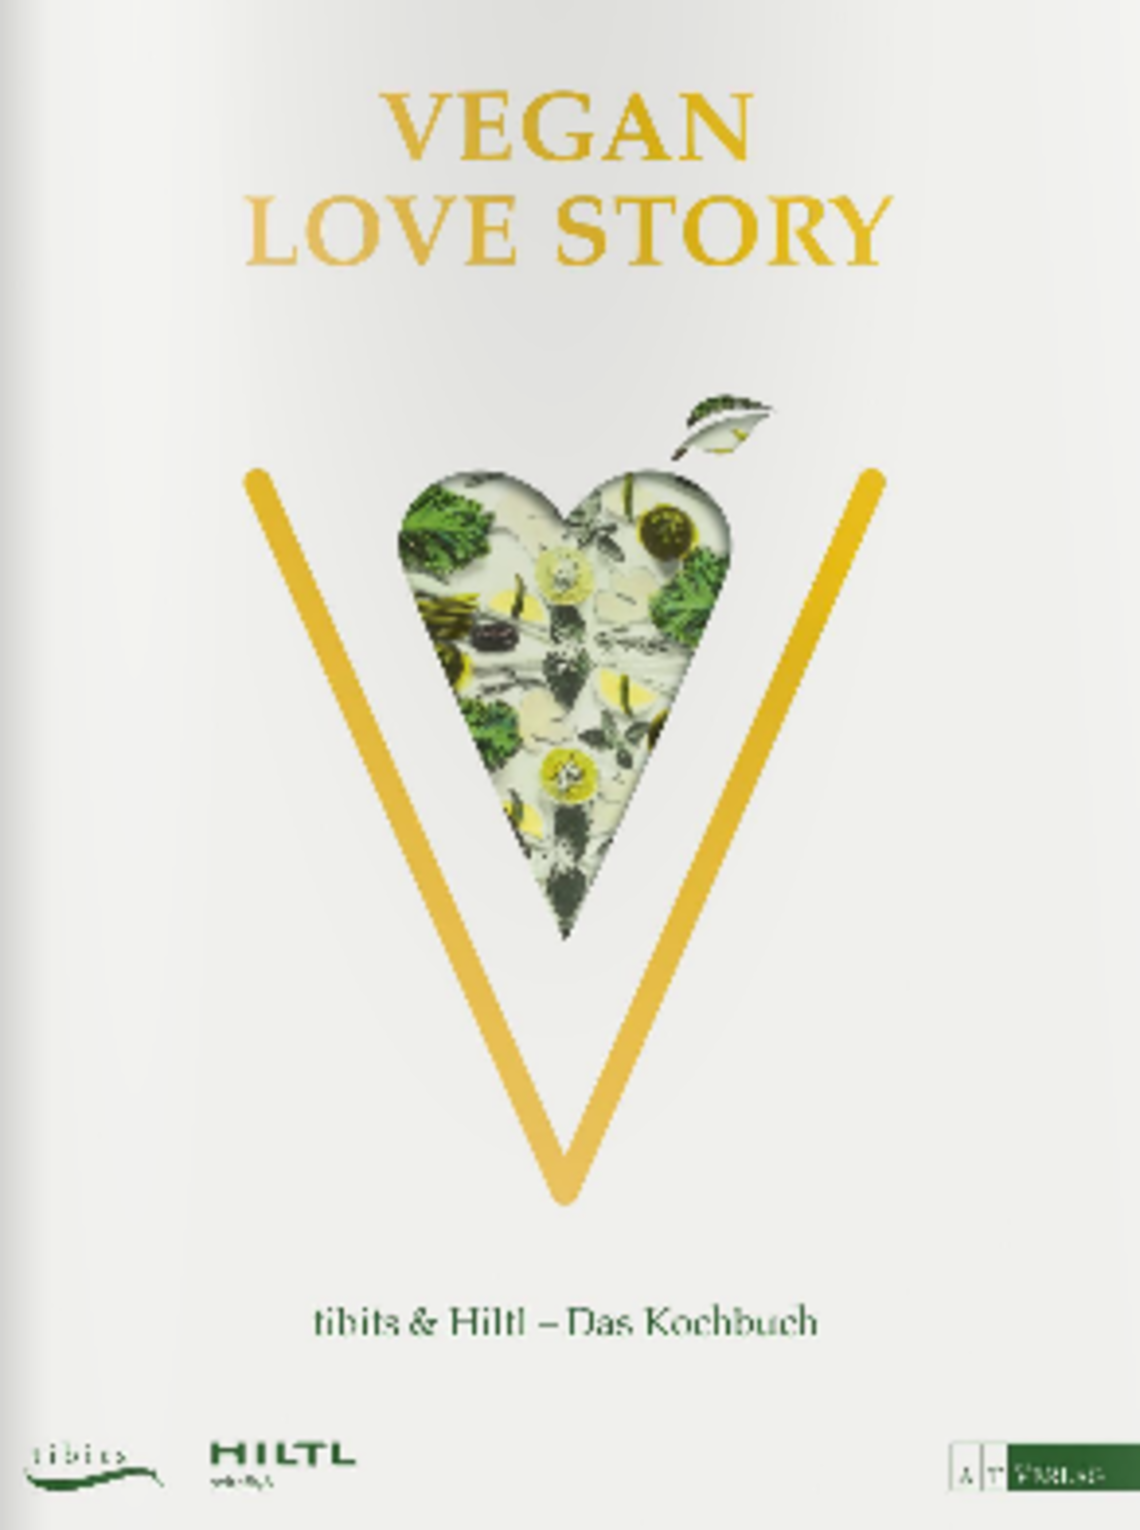 Vegan Love Story von tibits & Hiltl